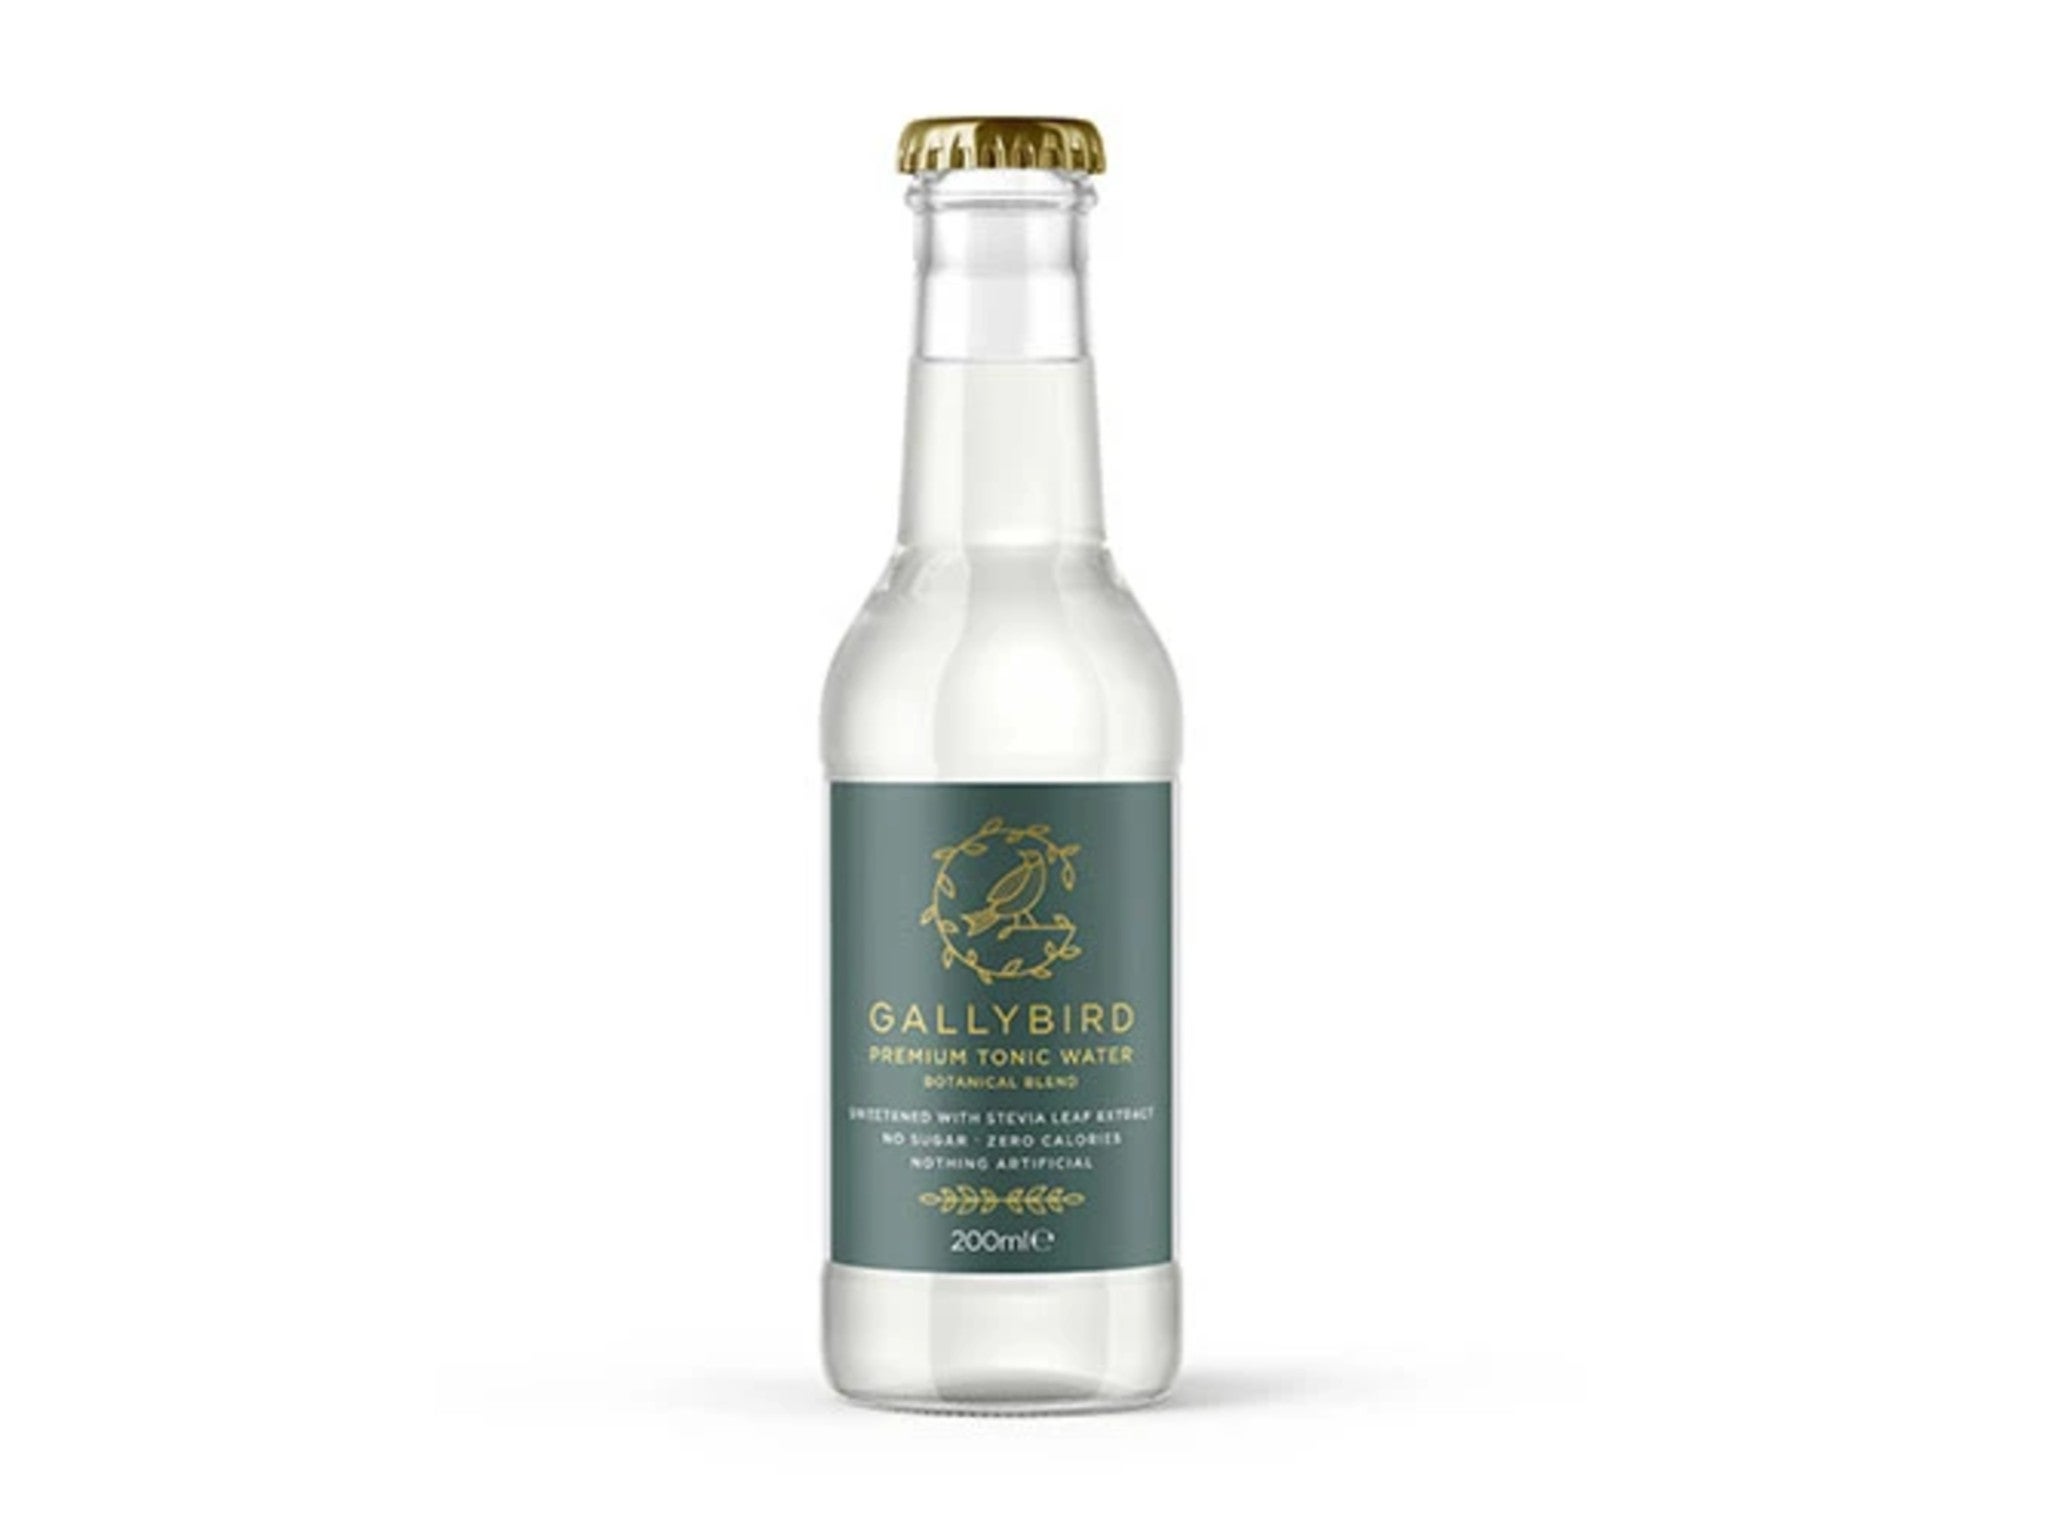 Gallybird premium tonic water – botanical blend, 200ml x 12 indybest.jpeg